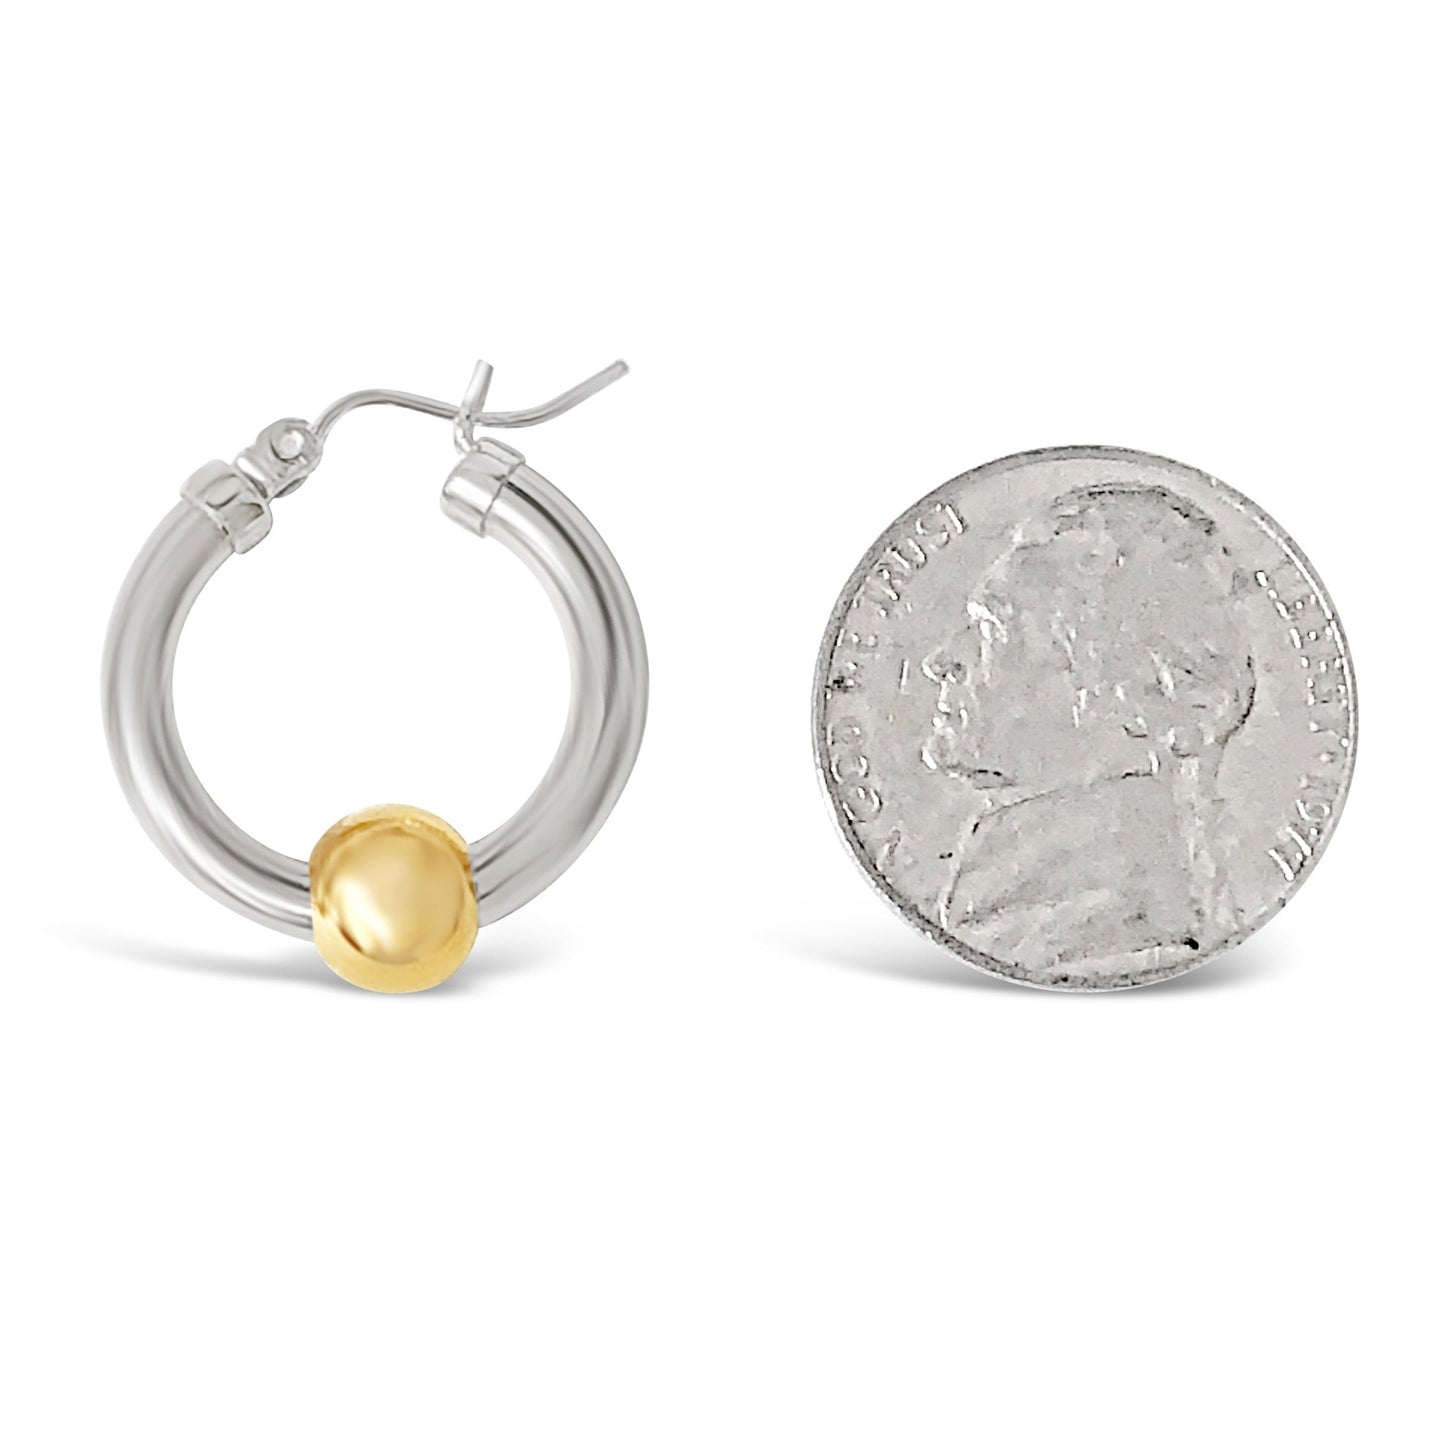 Cape cod beach ball small earring measured against a nickel coin